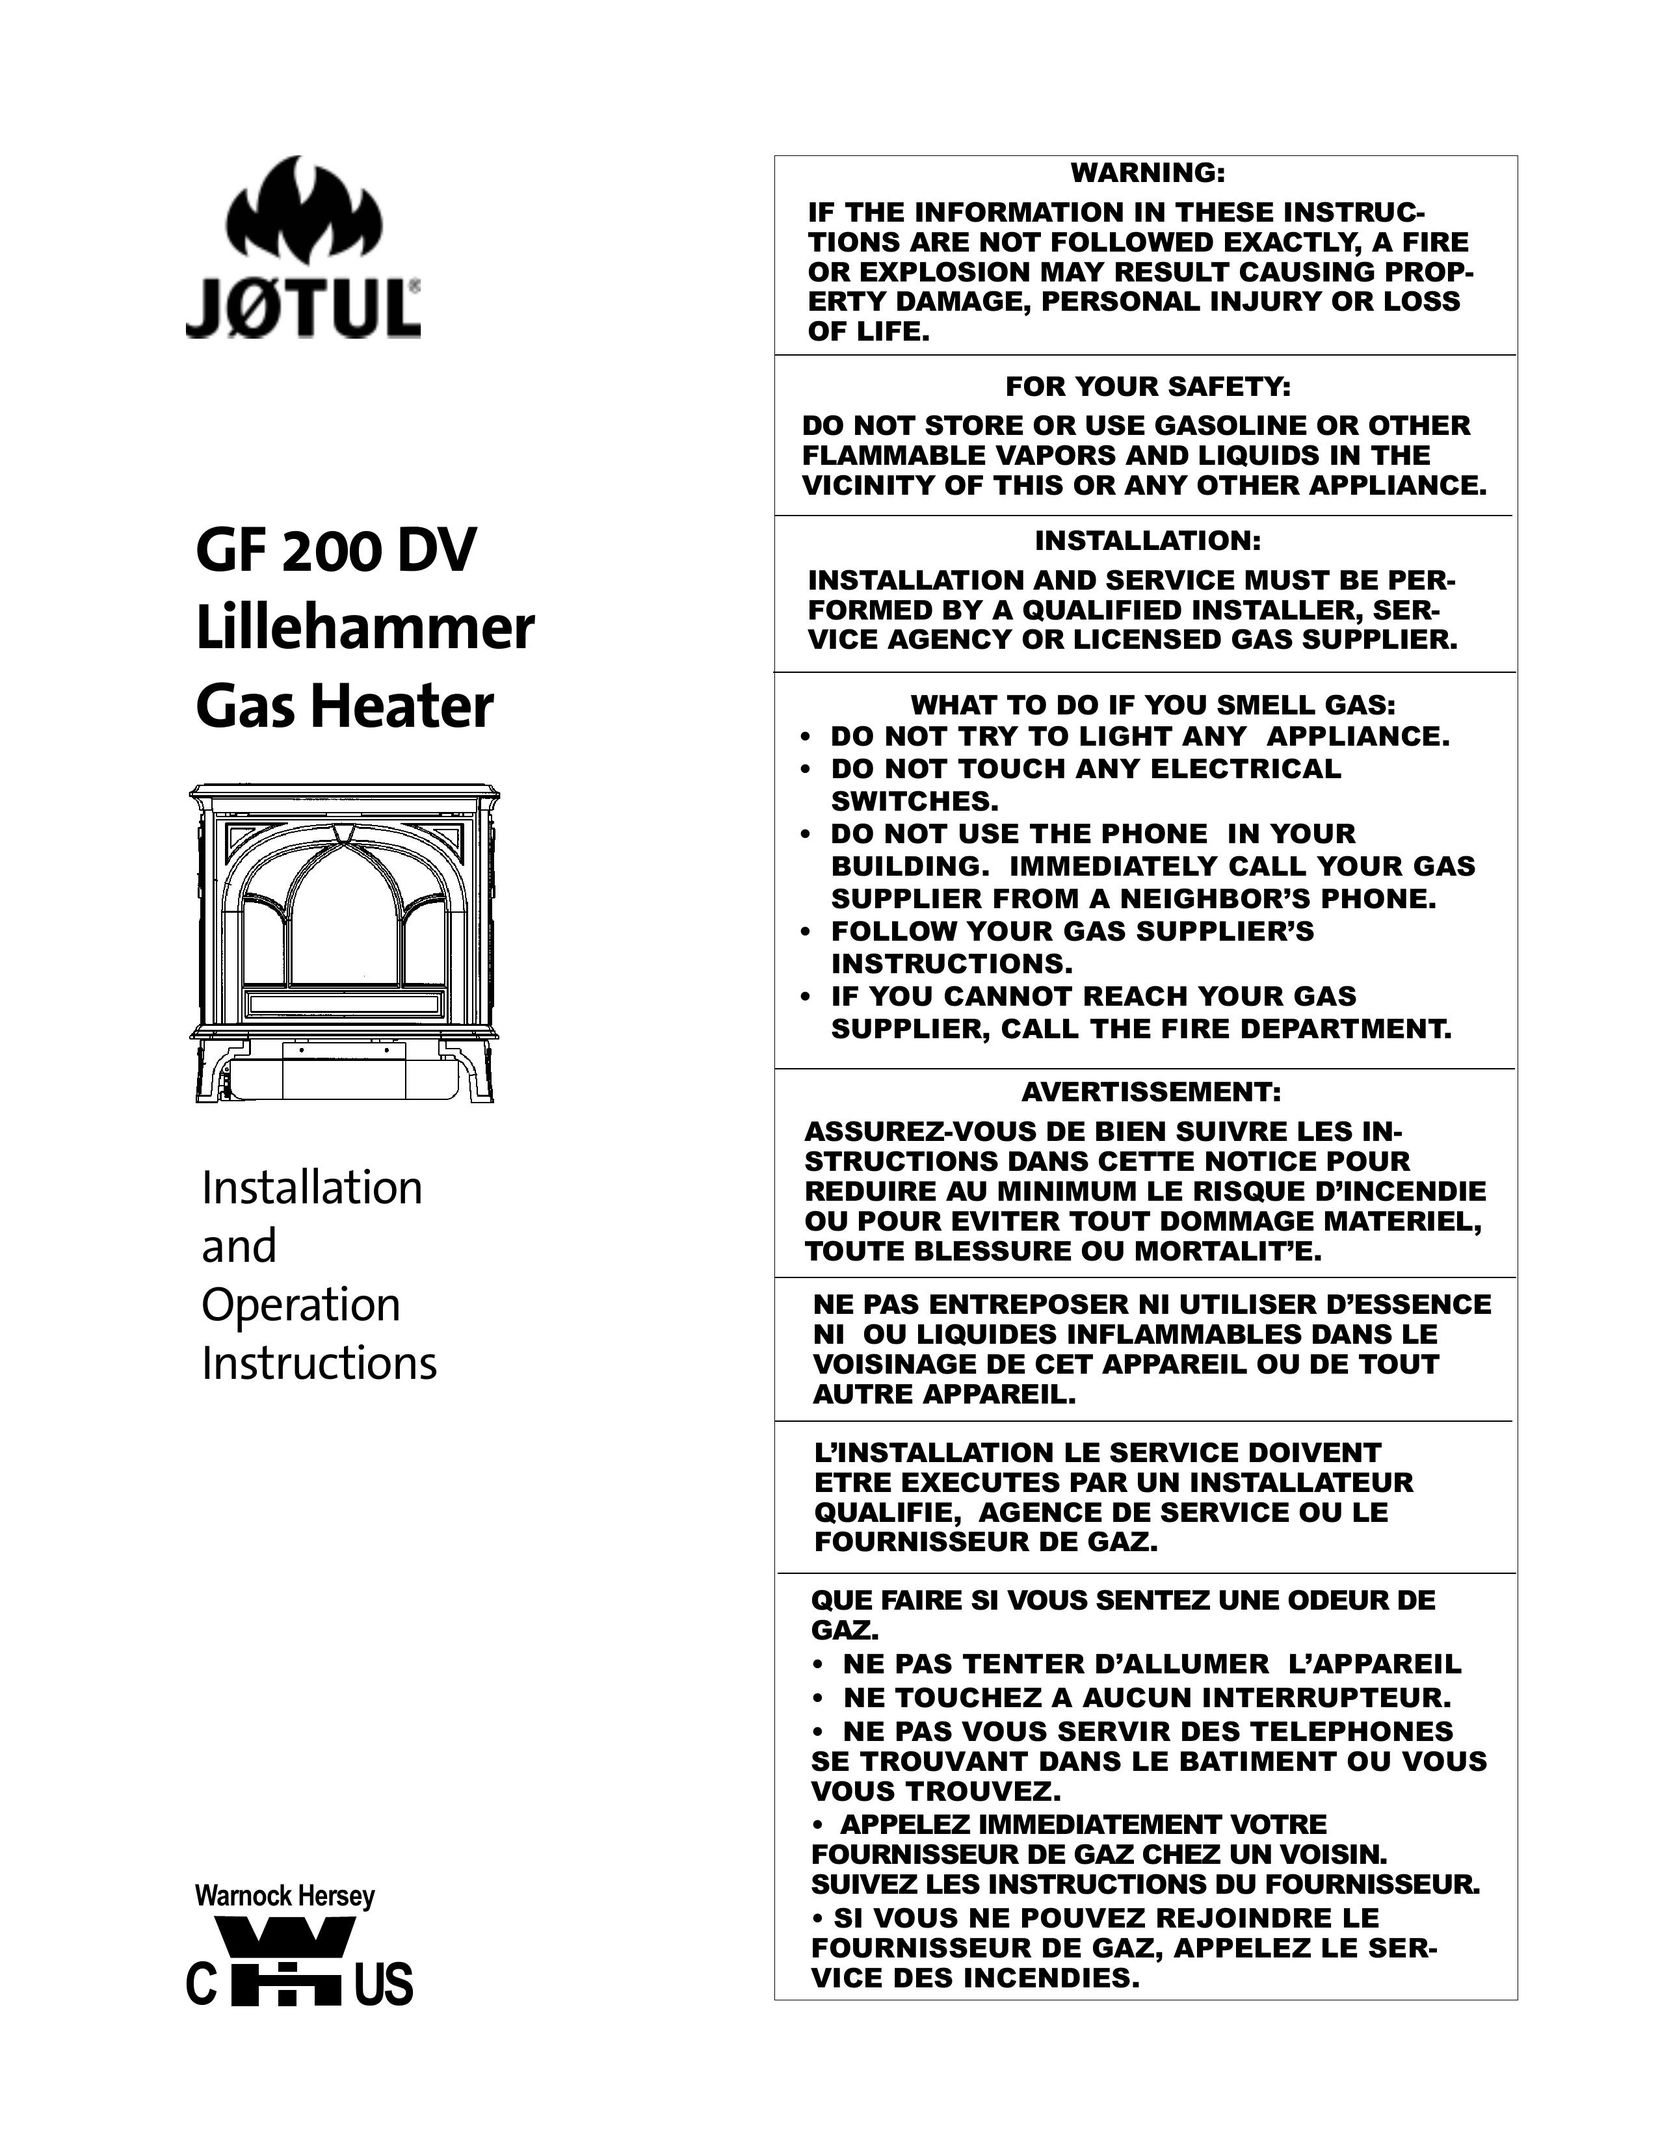 Jotul GF 200 DV Stove User Manual